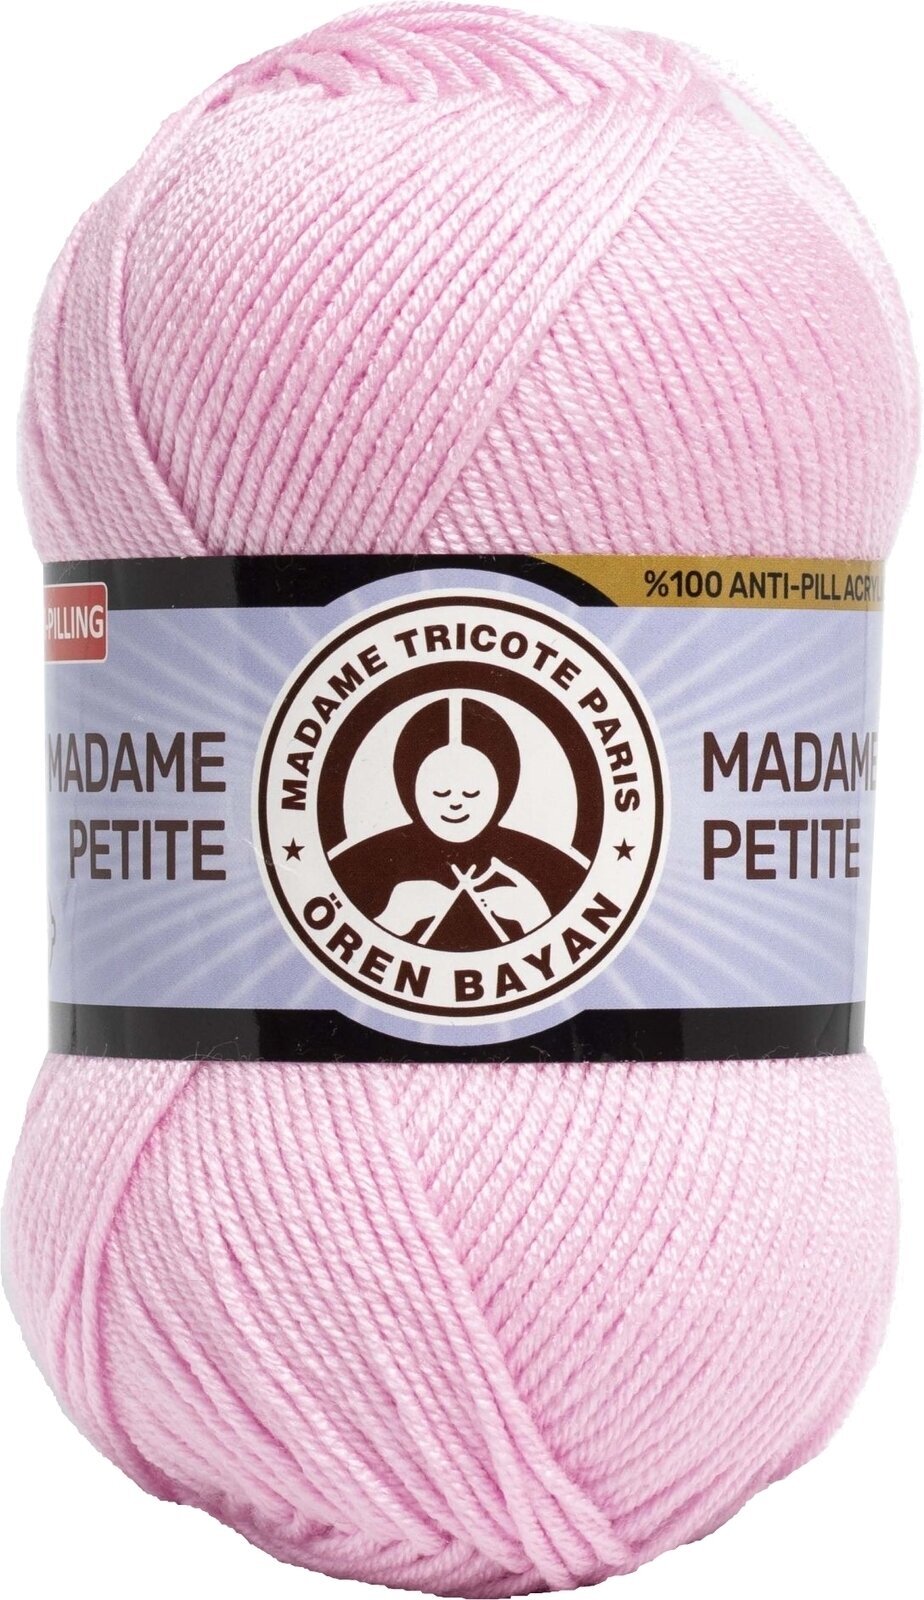 Pletilna preja Madame Tricote Paris Madame Petite 3848 93 Pletilna preja